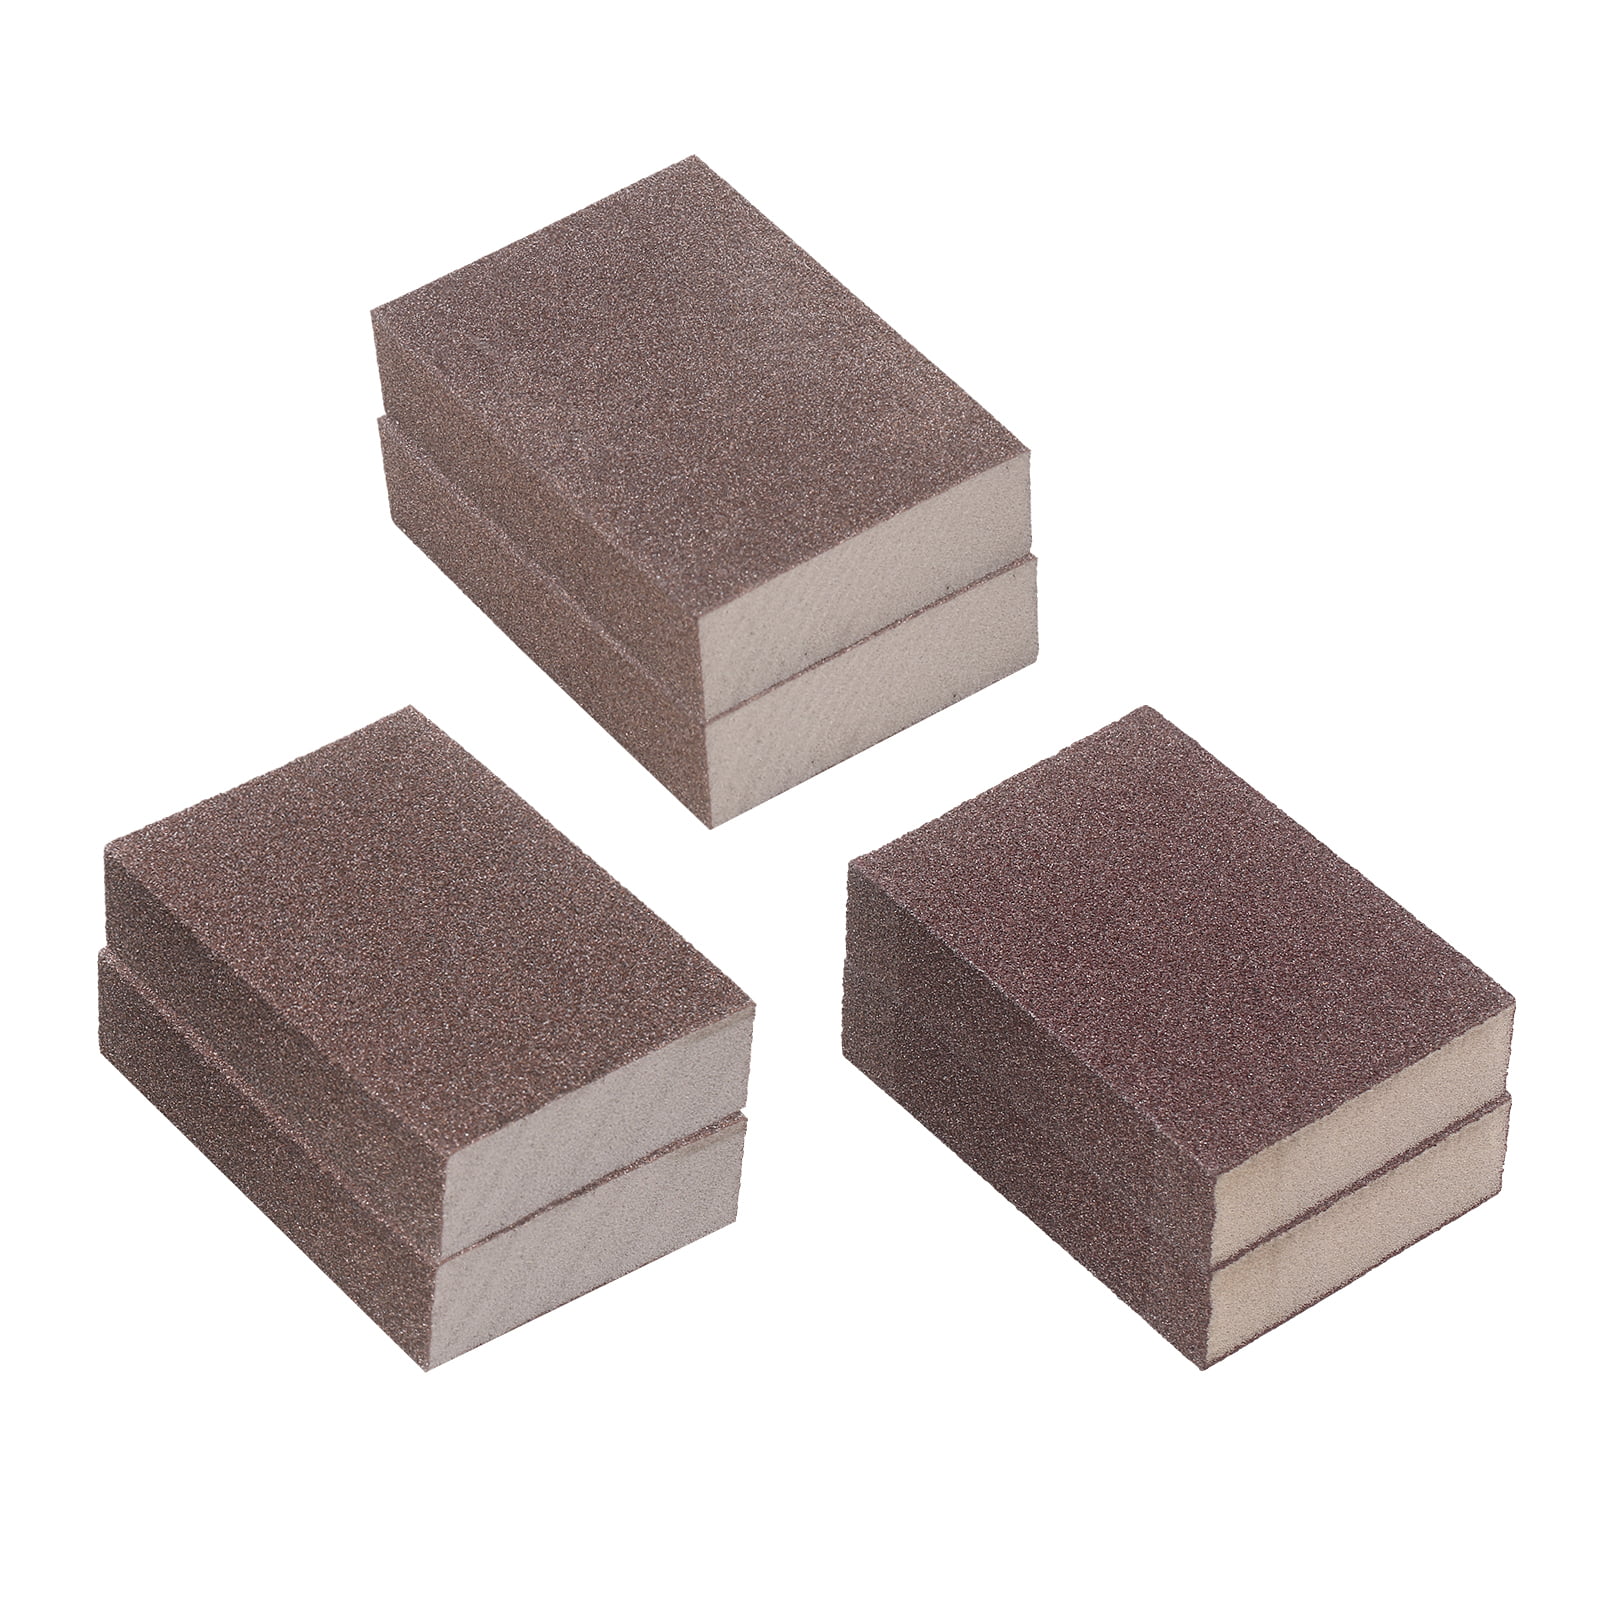 10 PCS Fine & Superfine Sanding Sponge Sheet Block for Metal Plastic Wood 